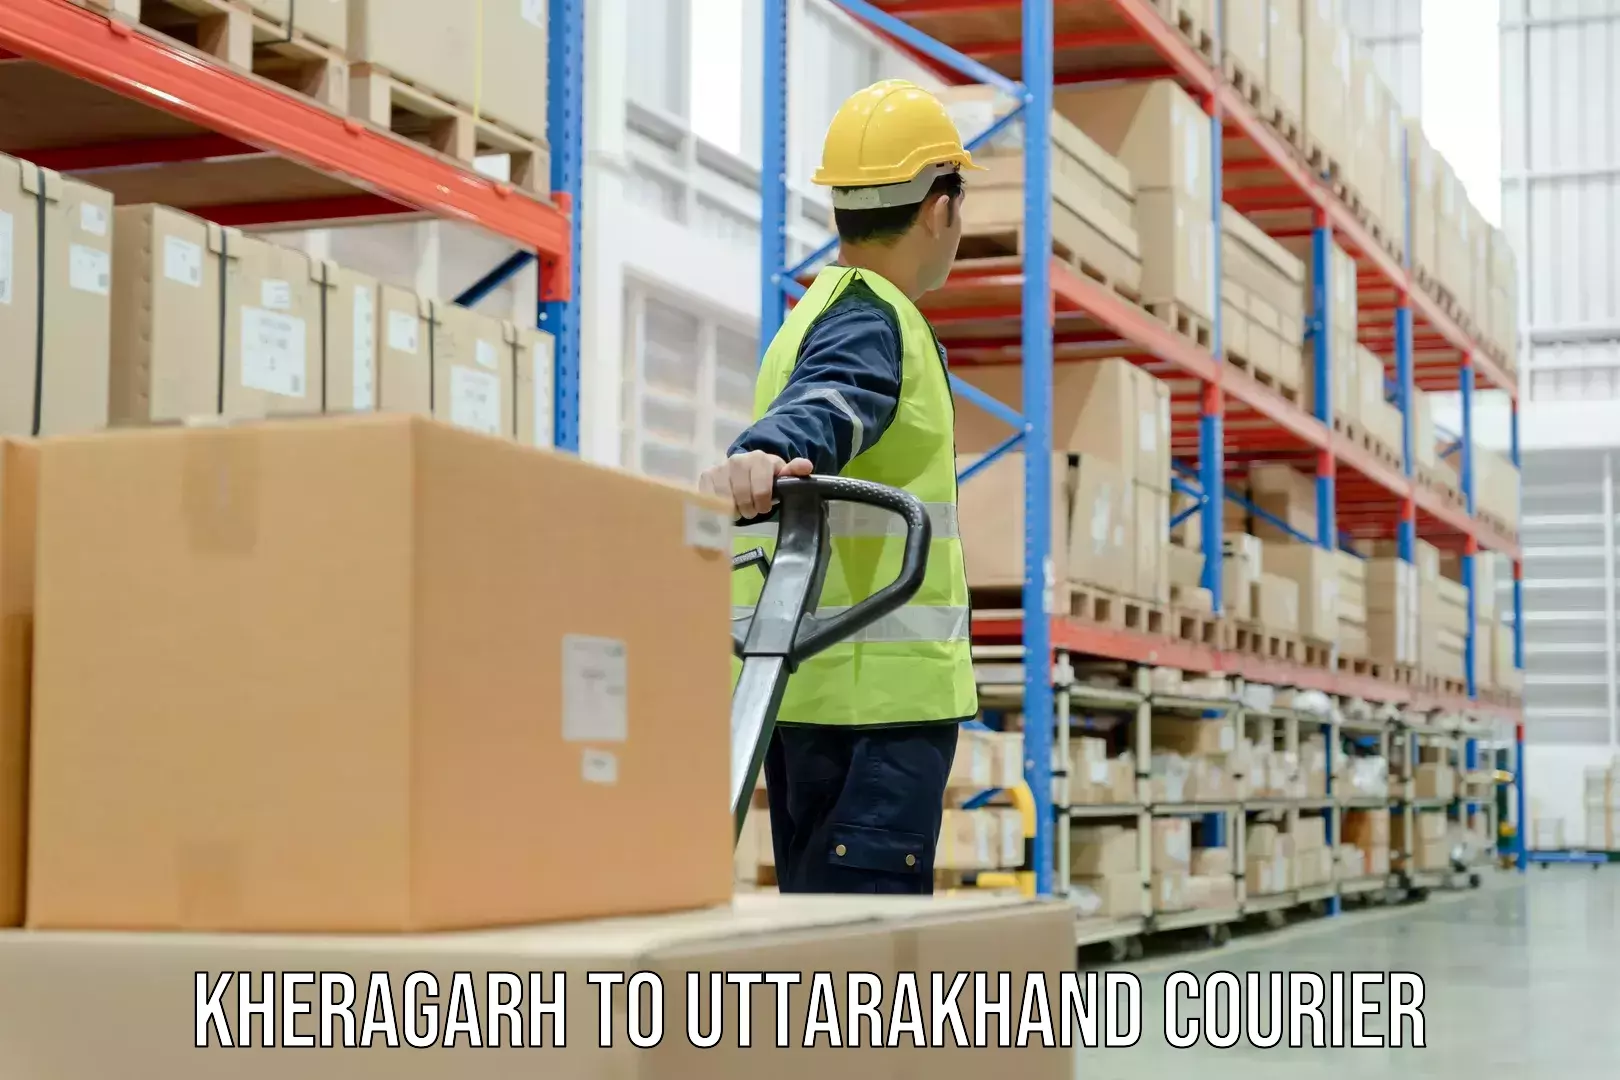 Comprehensive shipping network Kheragarh to Tehri Garhwal